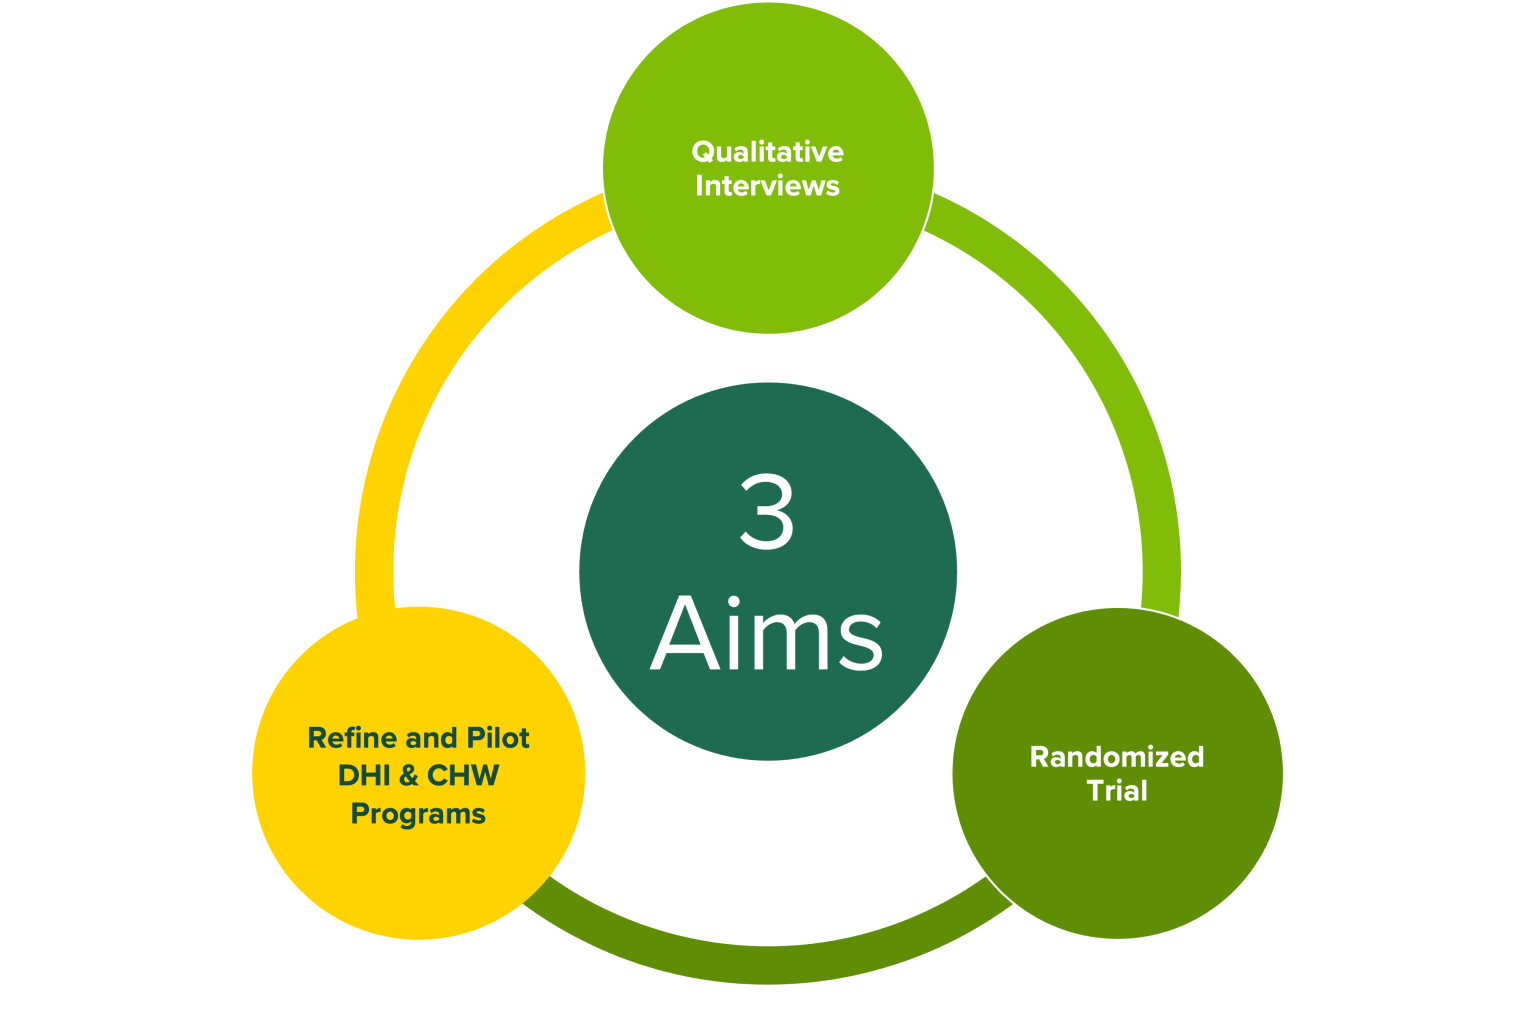 Image depicting the three aims of POPPY
1. Qualitative Interviews
2. Refine & Pilot DHI & CHW Programs
3. Randomized Trial